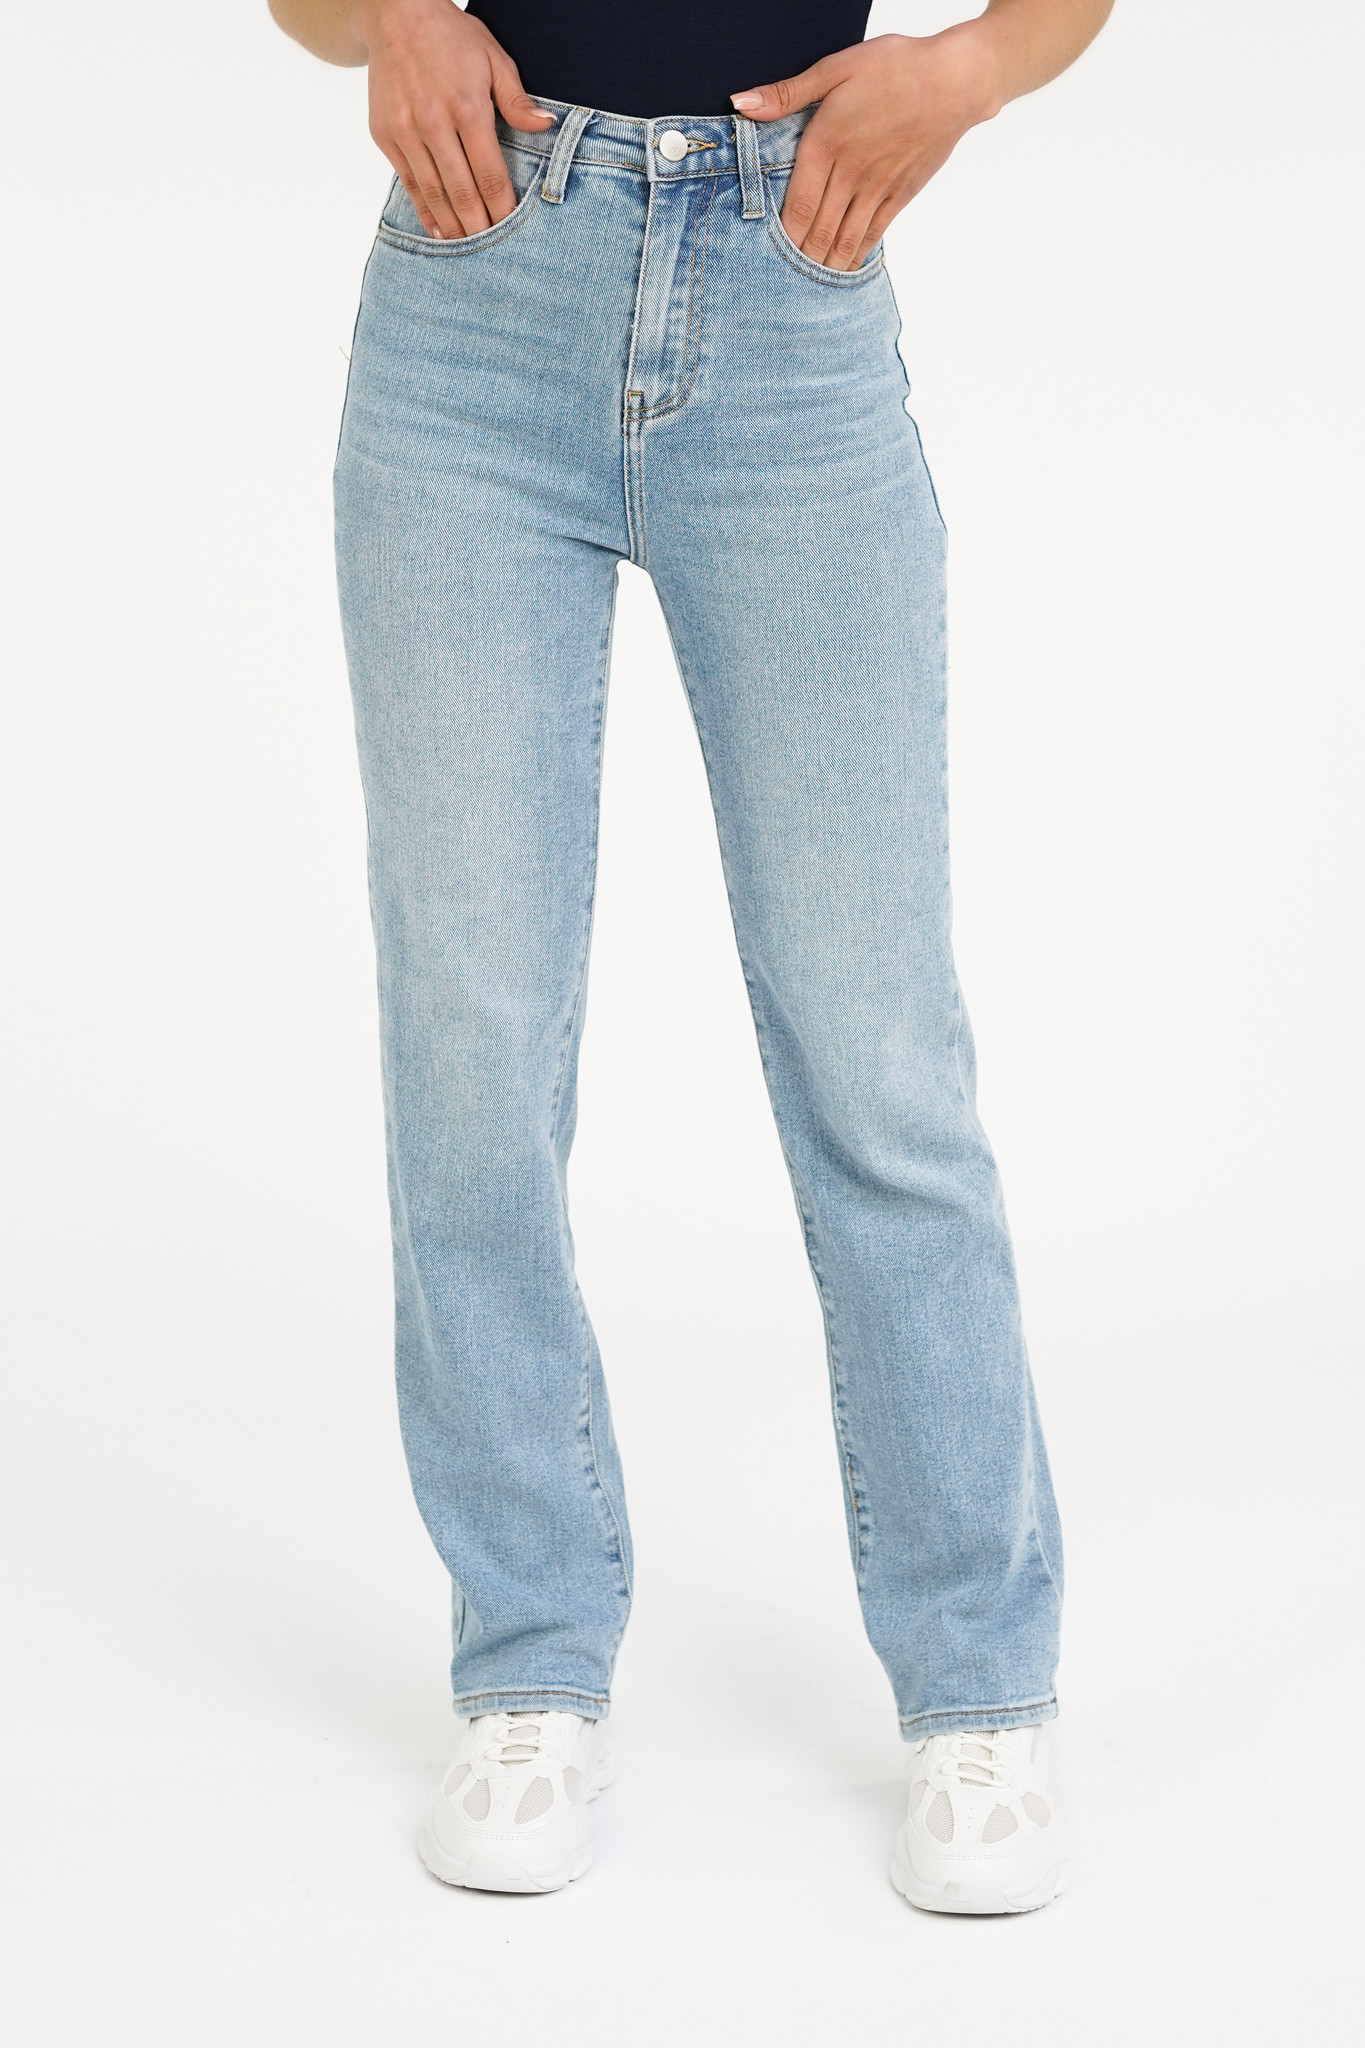 zak Kruipen Nauwgezet Straight leg jeans met stretch en high waist model blauw | Esuals.nl -  Esuals